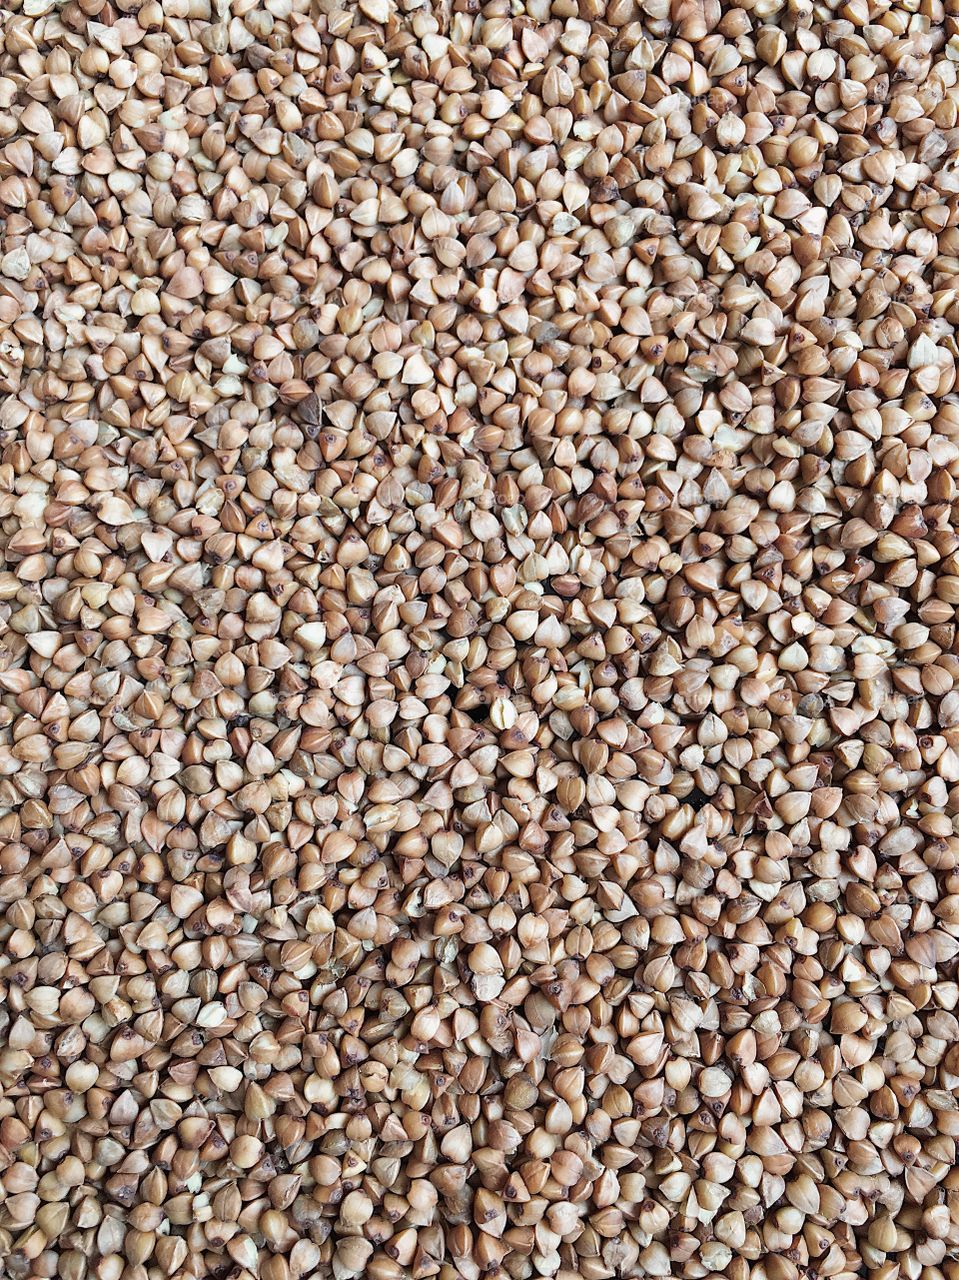 Dry buckwheat 